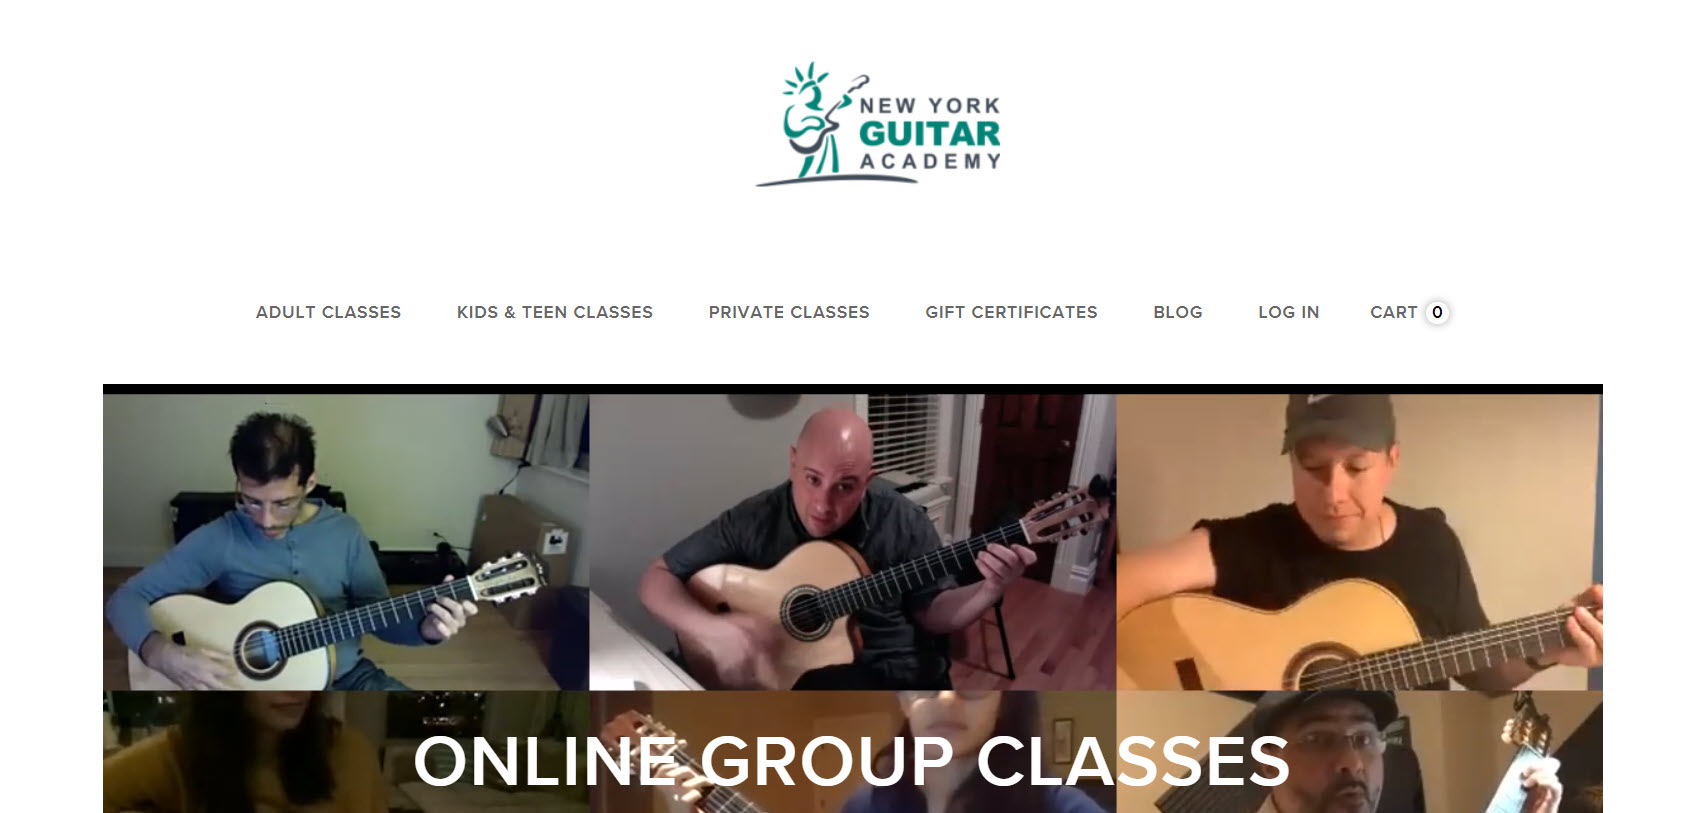 New York Guitar Academy